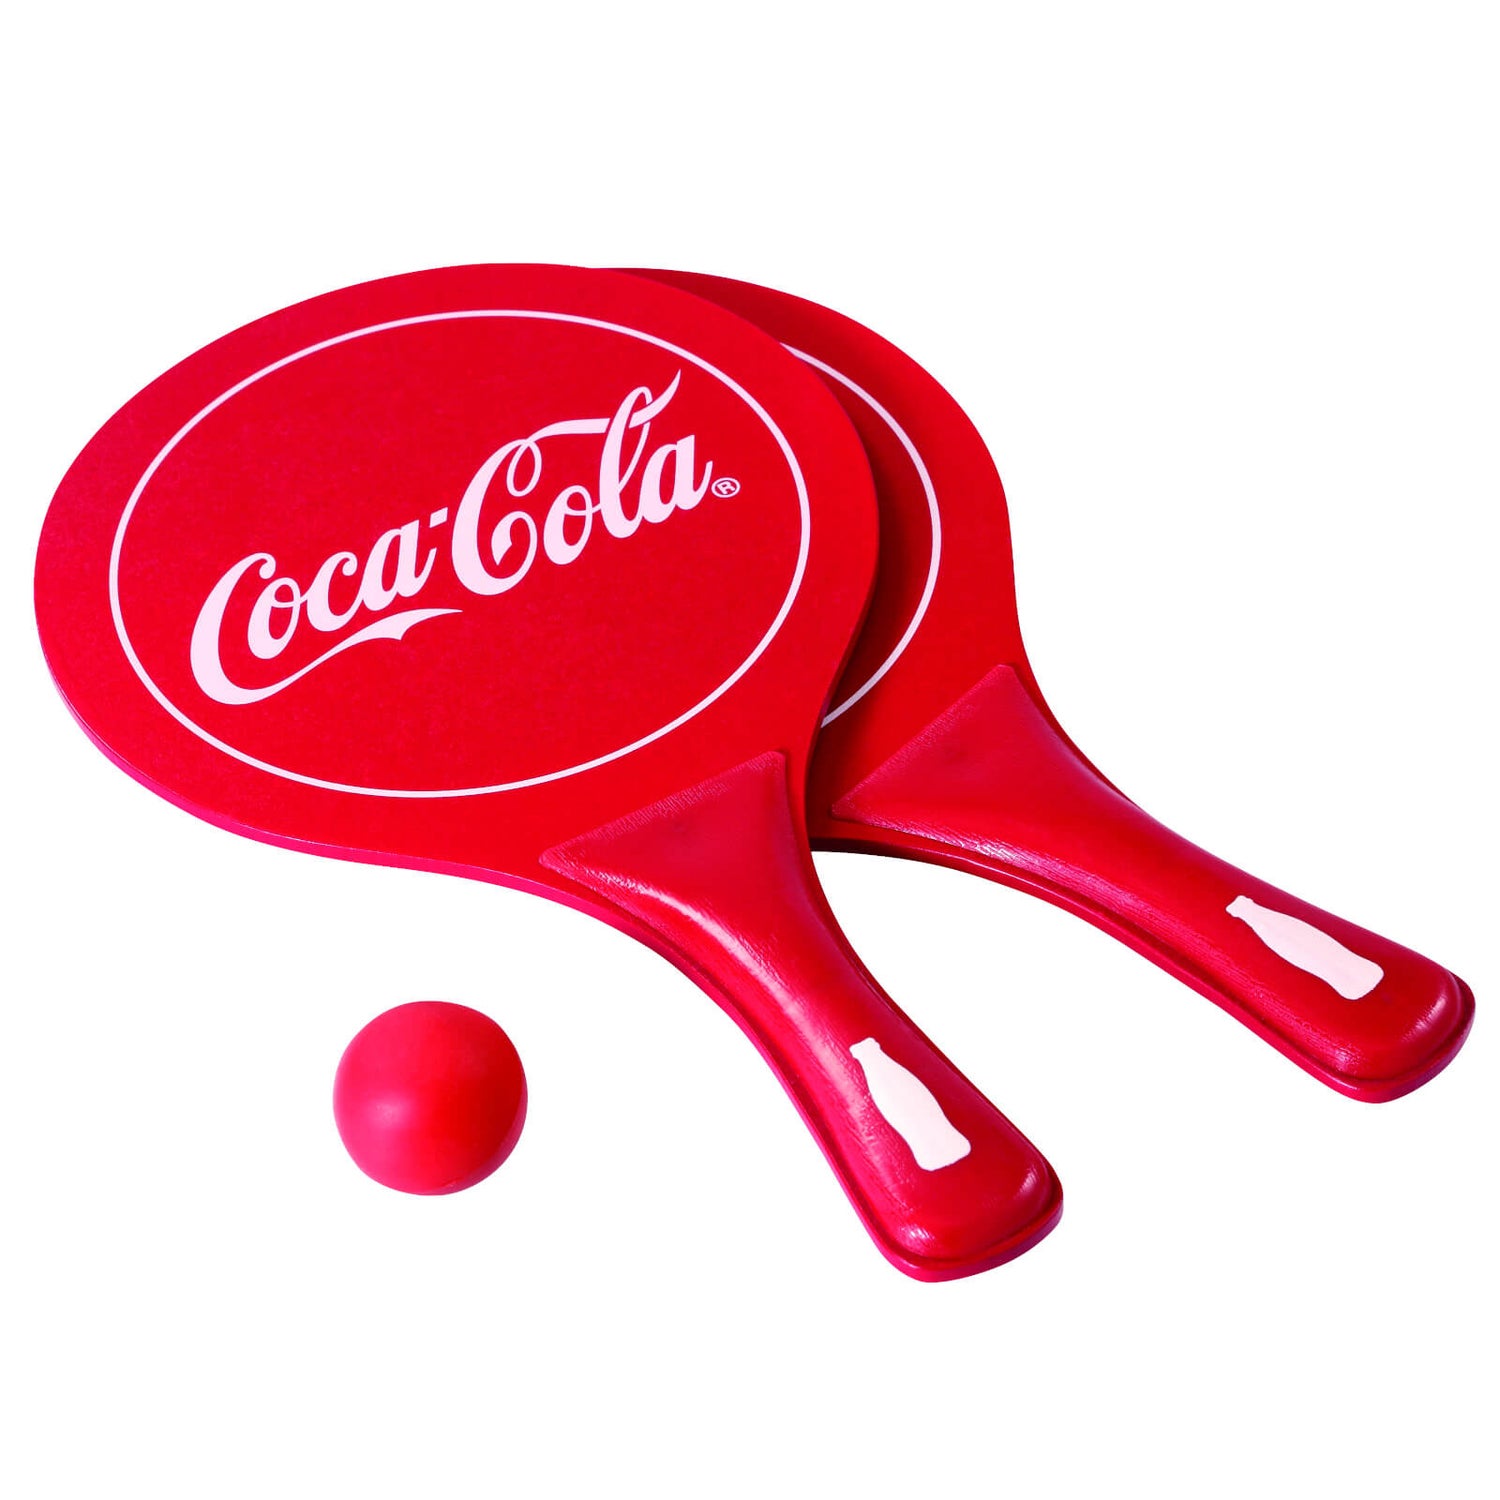 Coca-Cola Paddle Ball Set